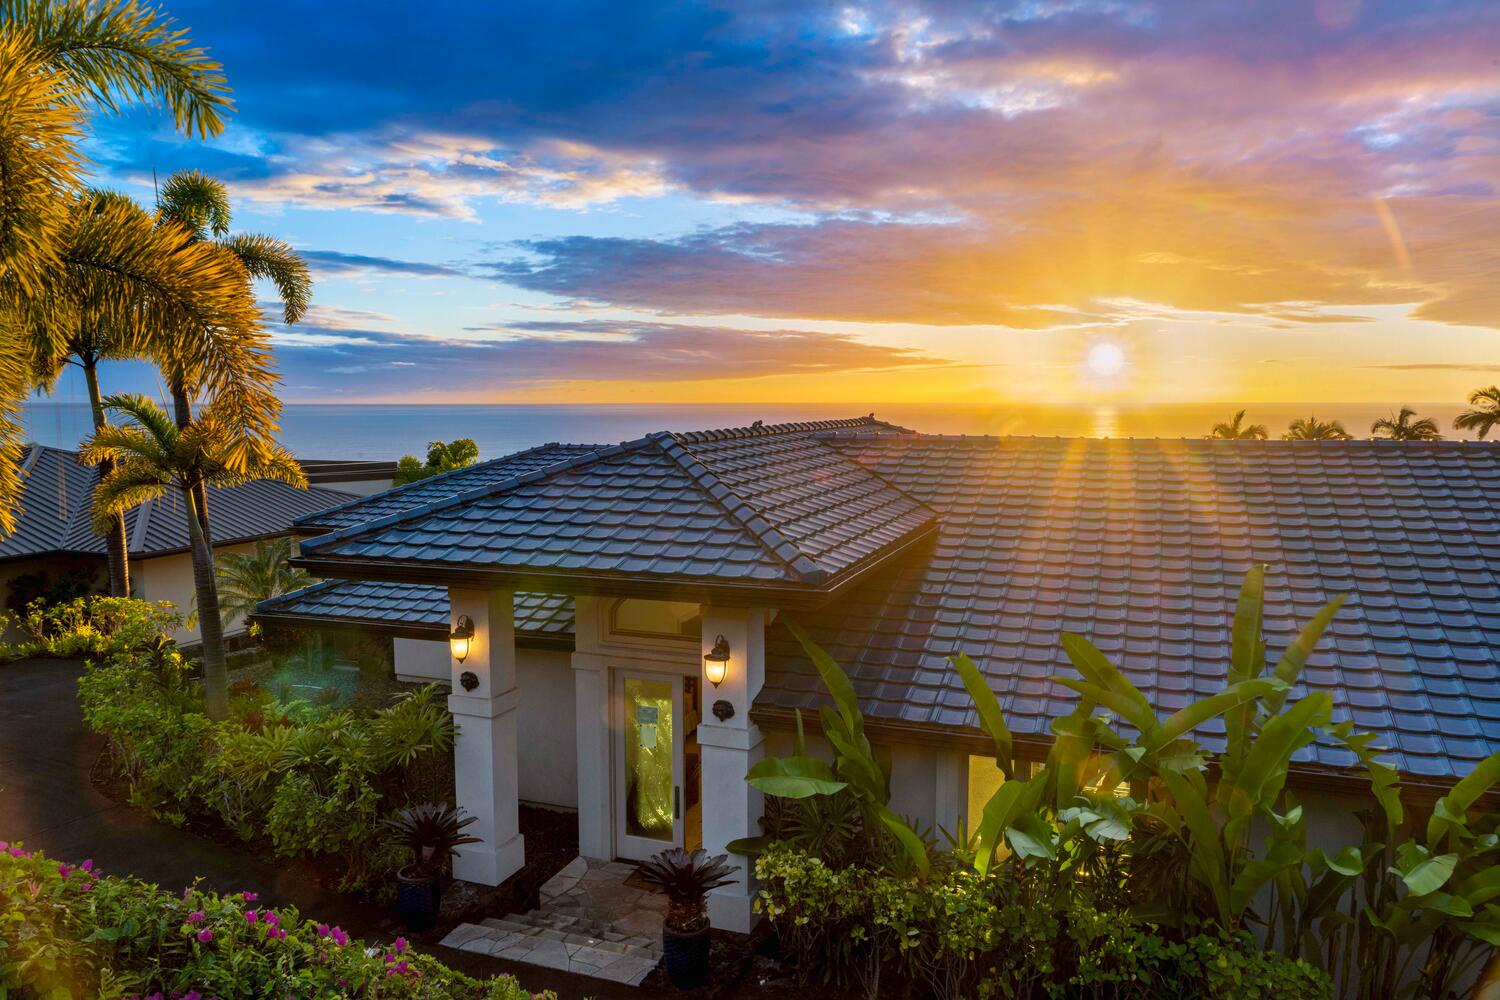 Kailua Kona Vacation Rentals, Blue Hawaii - Sunrise at Blue Hawaii.